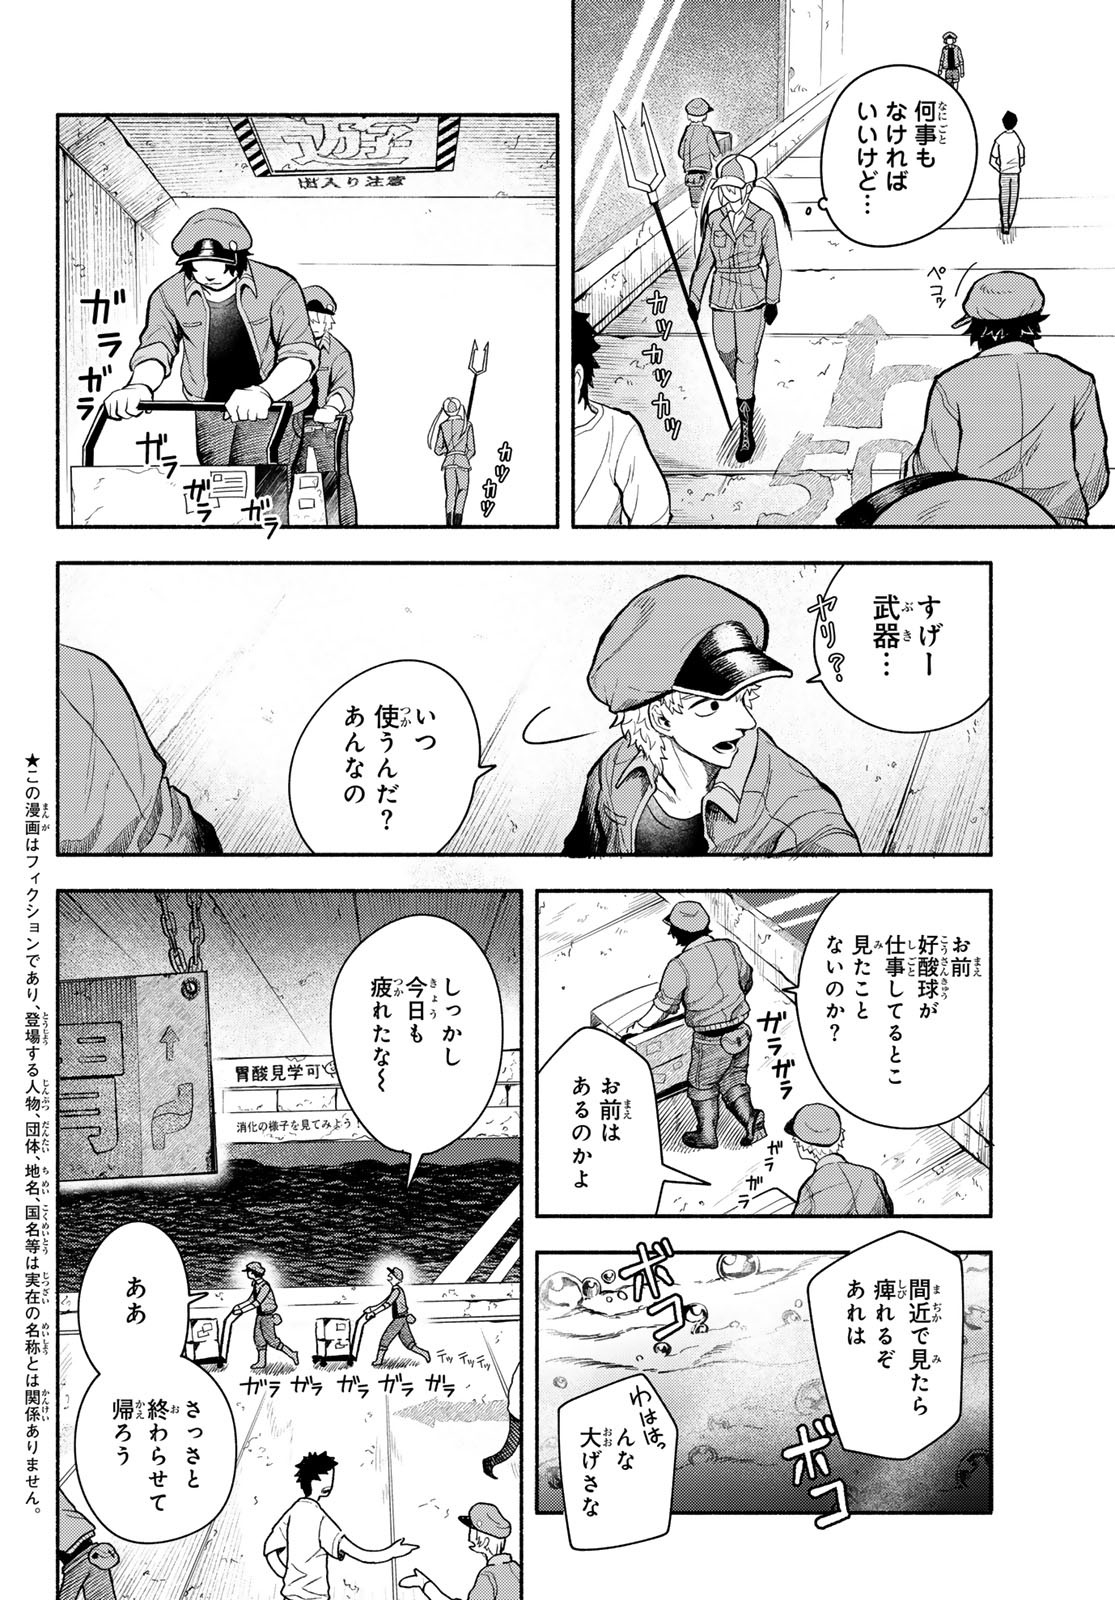 Hataraku Saibou Okusuri - Chapter 6 - Page 2